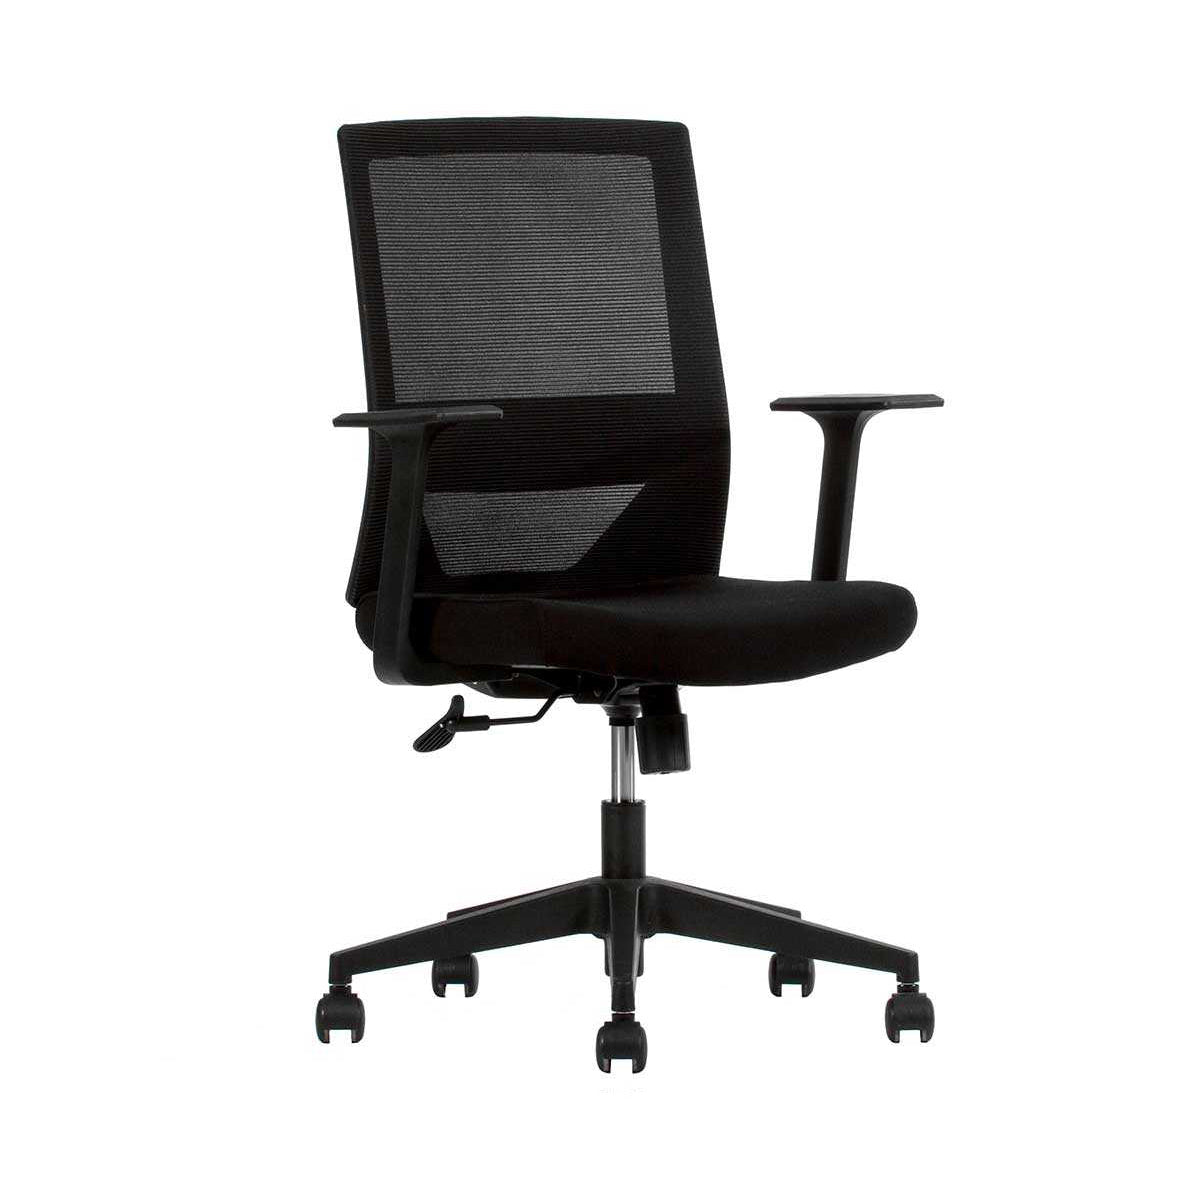 Sillón operativo Vision respaldo bajo tapizado en mesh y asiento en tela negro con base nylon